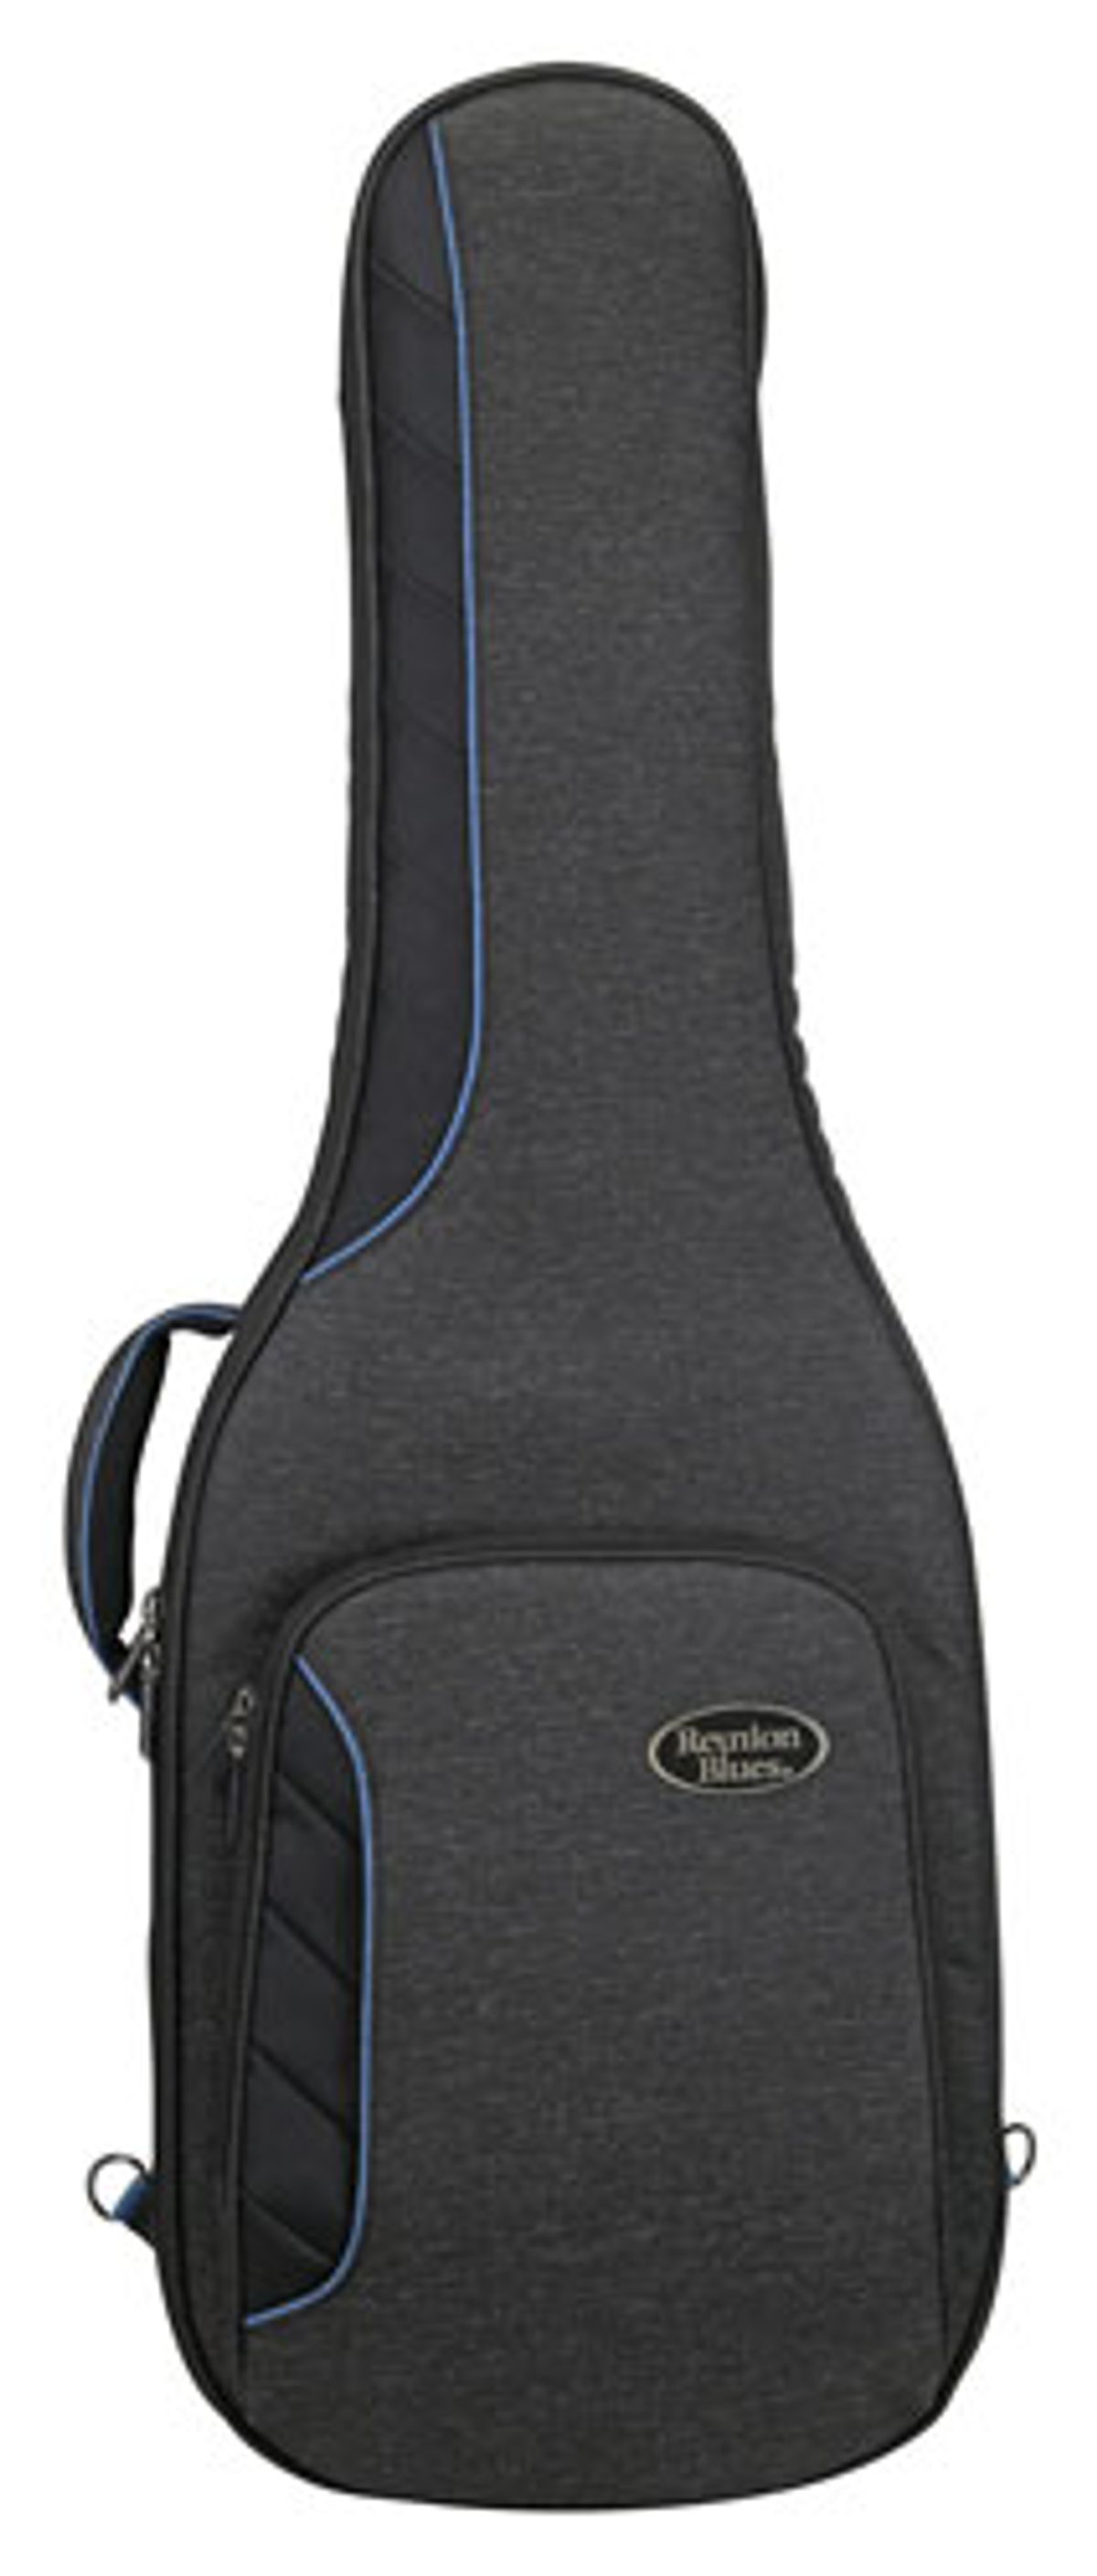 Reunion Blues Announces RB Continental Voyager Series Guitar Cases